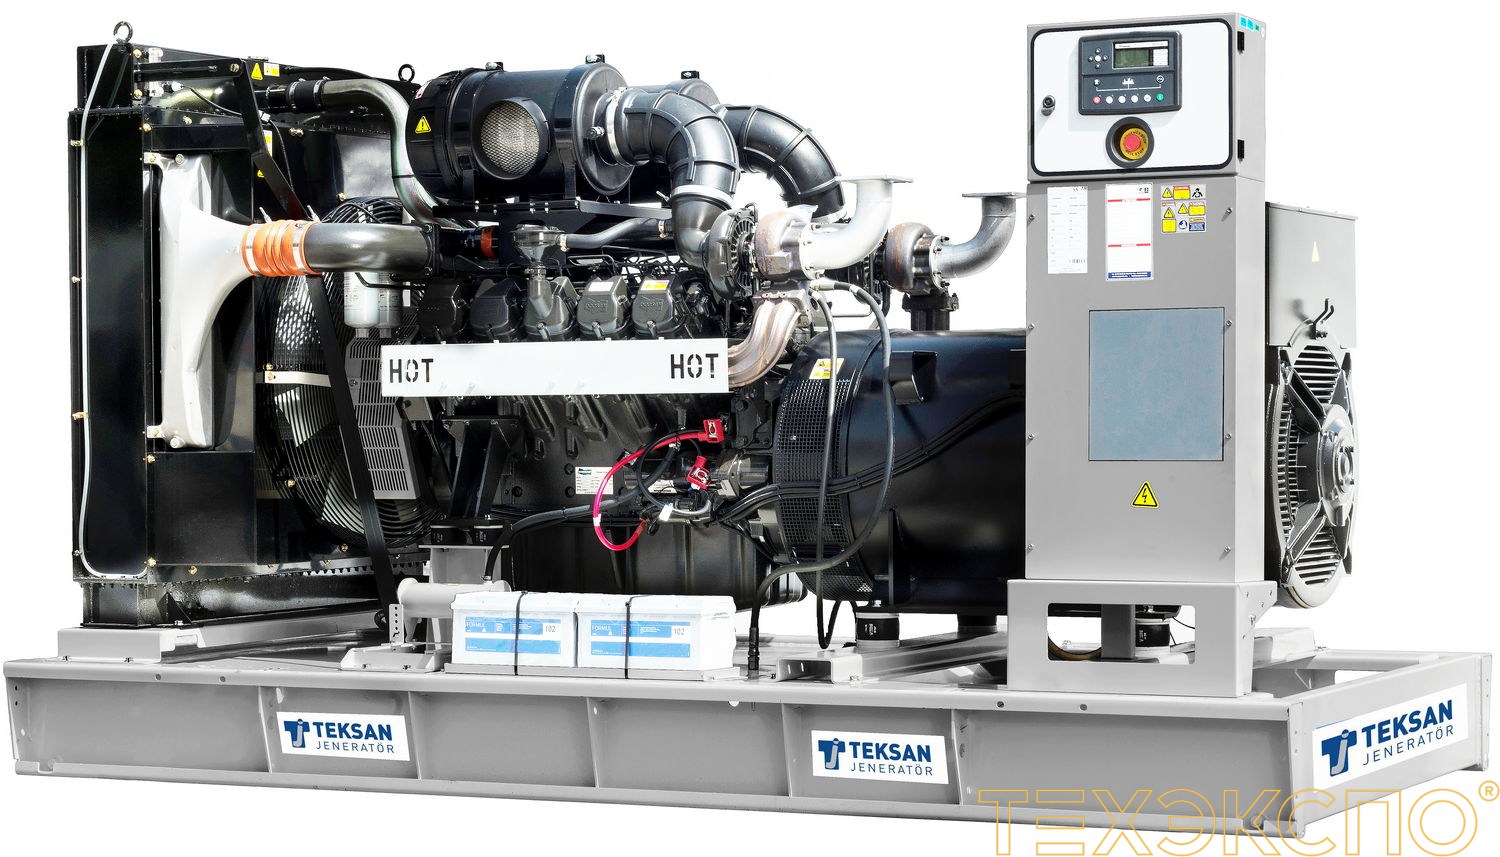 Teksan TJ750DW5C - ДЭС 545 кВт в Санкт-Петербурге за 7 492 759 рублей | Дизельная электростанция в Техэкспо